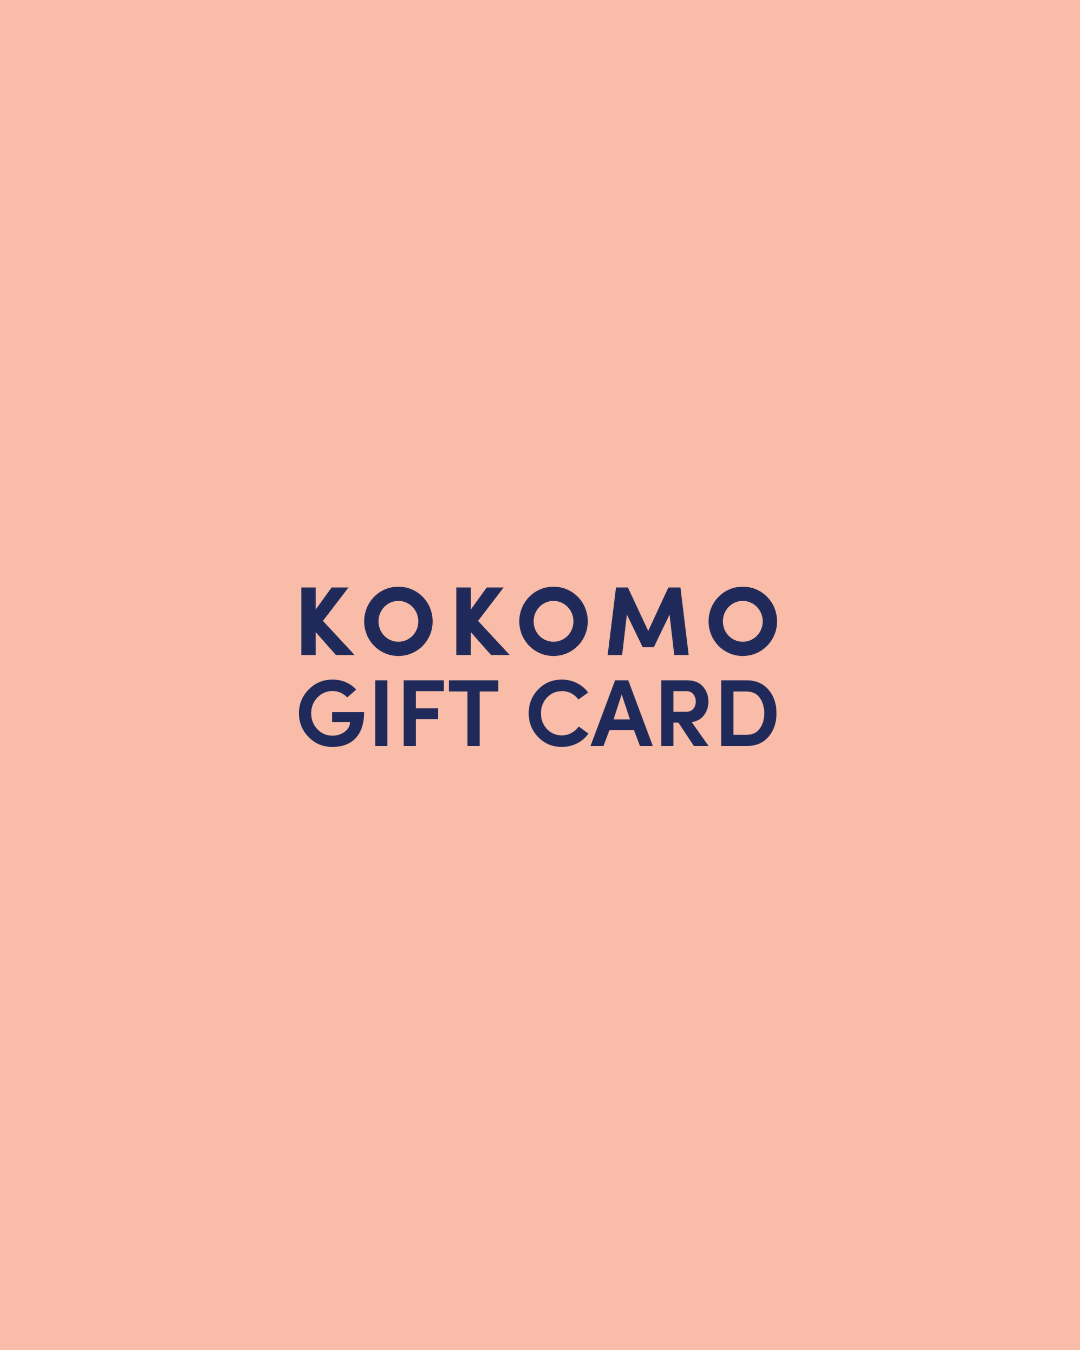 Kokomo Gift Card